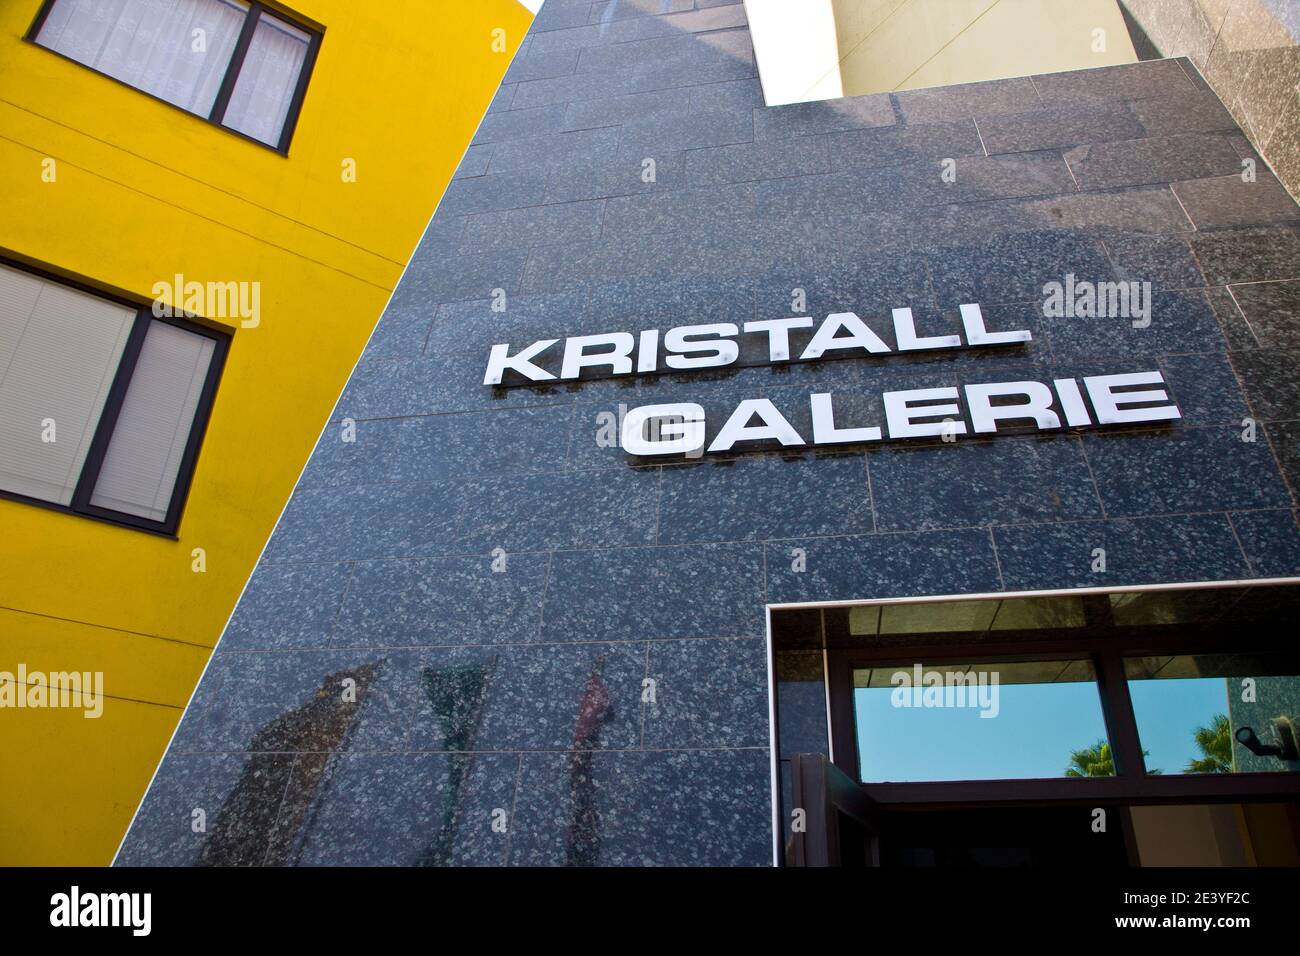 Kristall Galerie, Swakopmund, Namibia, Africa Foto Stock